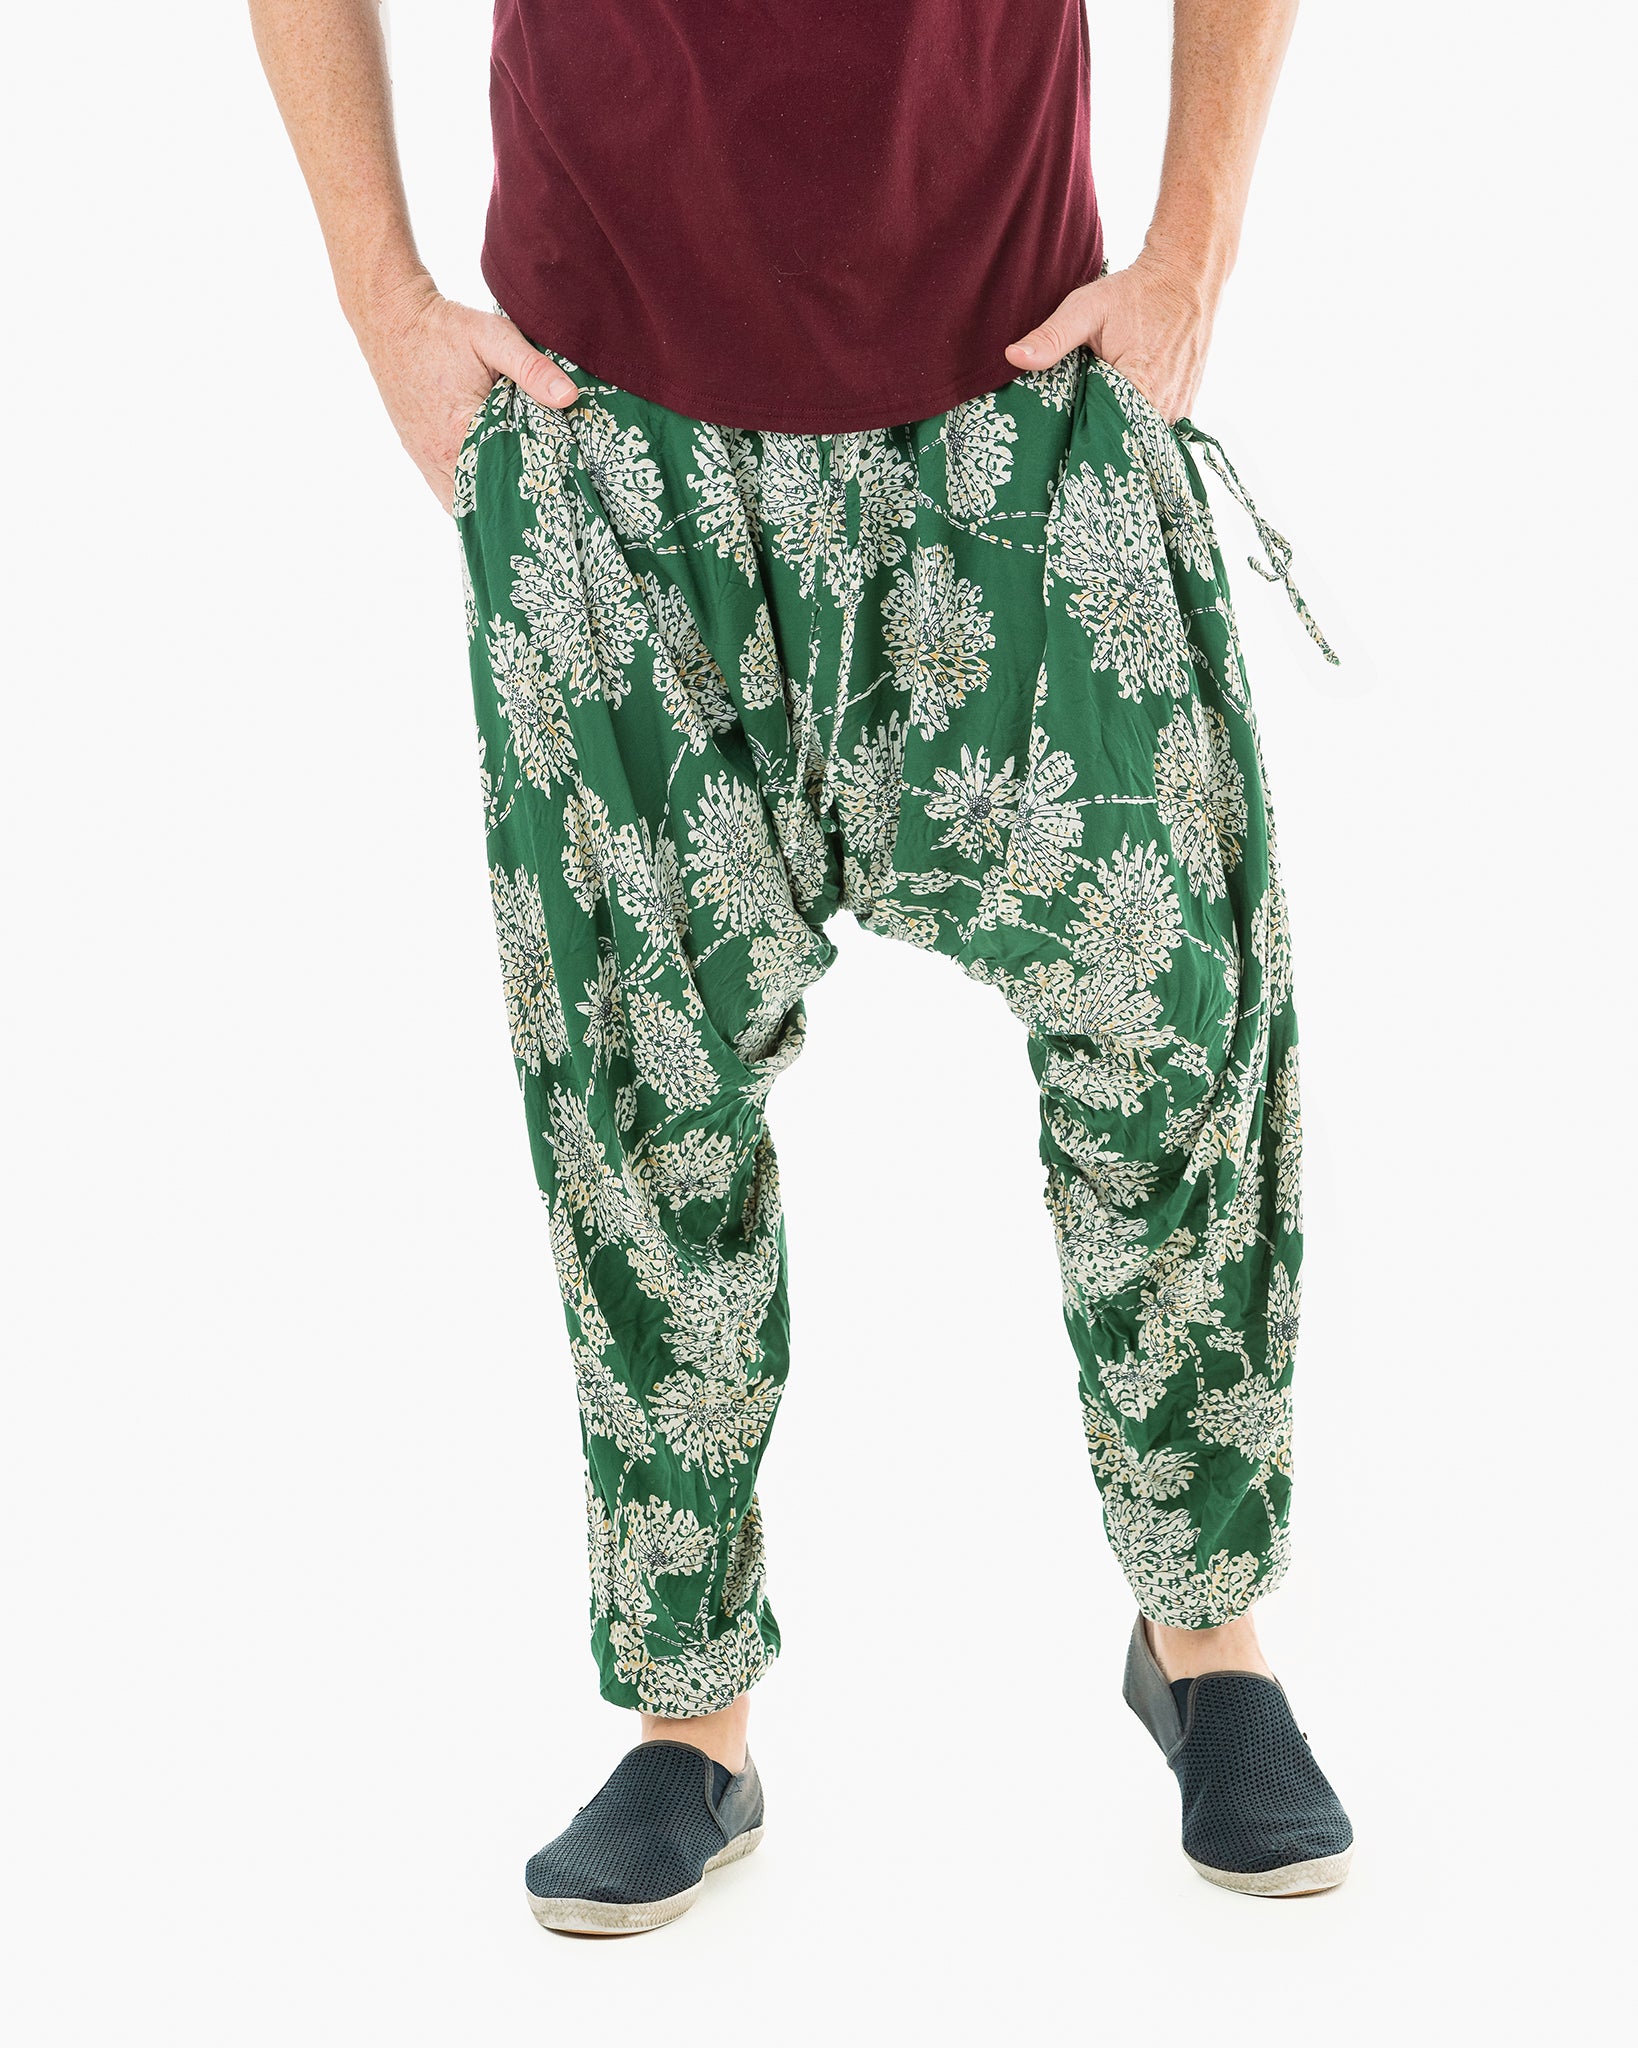 Christian speer Wanten Thai Harem Pants | Floral Print | Shop Online @ Buddha Pants